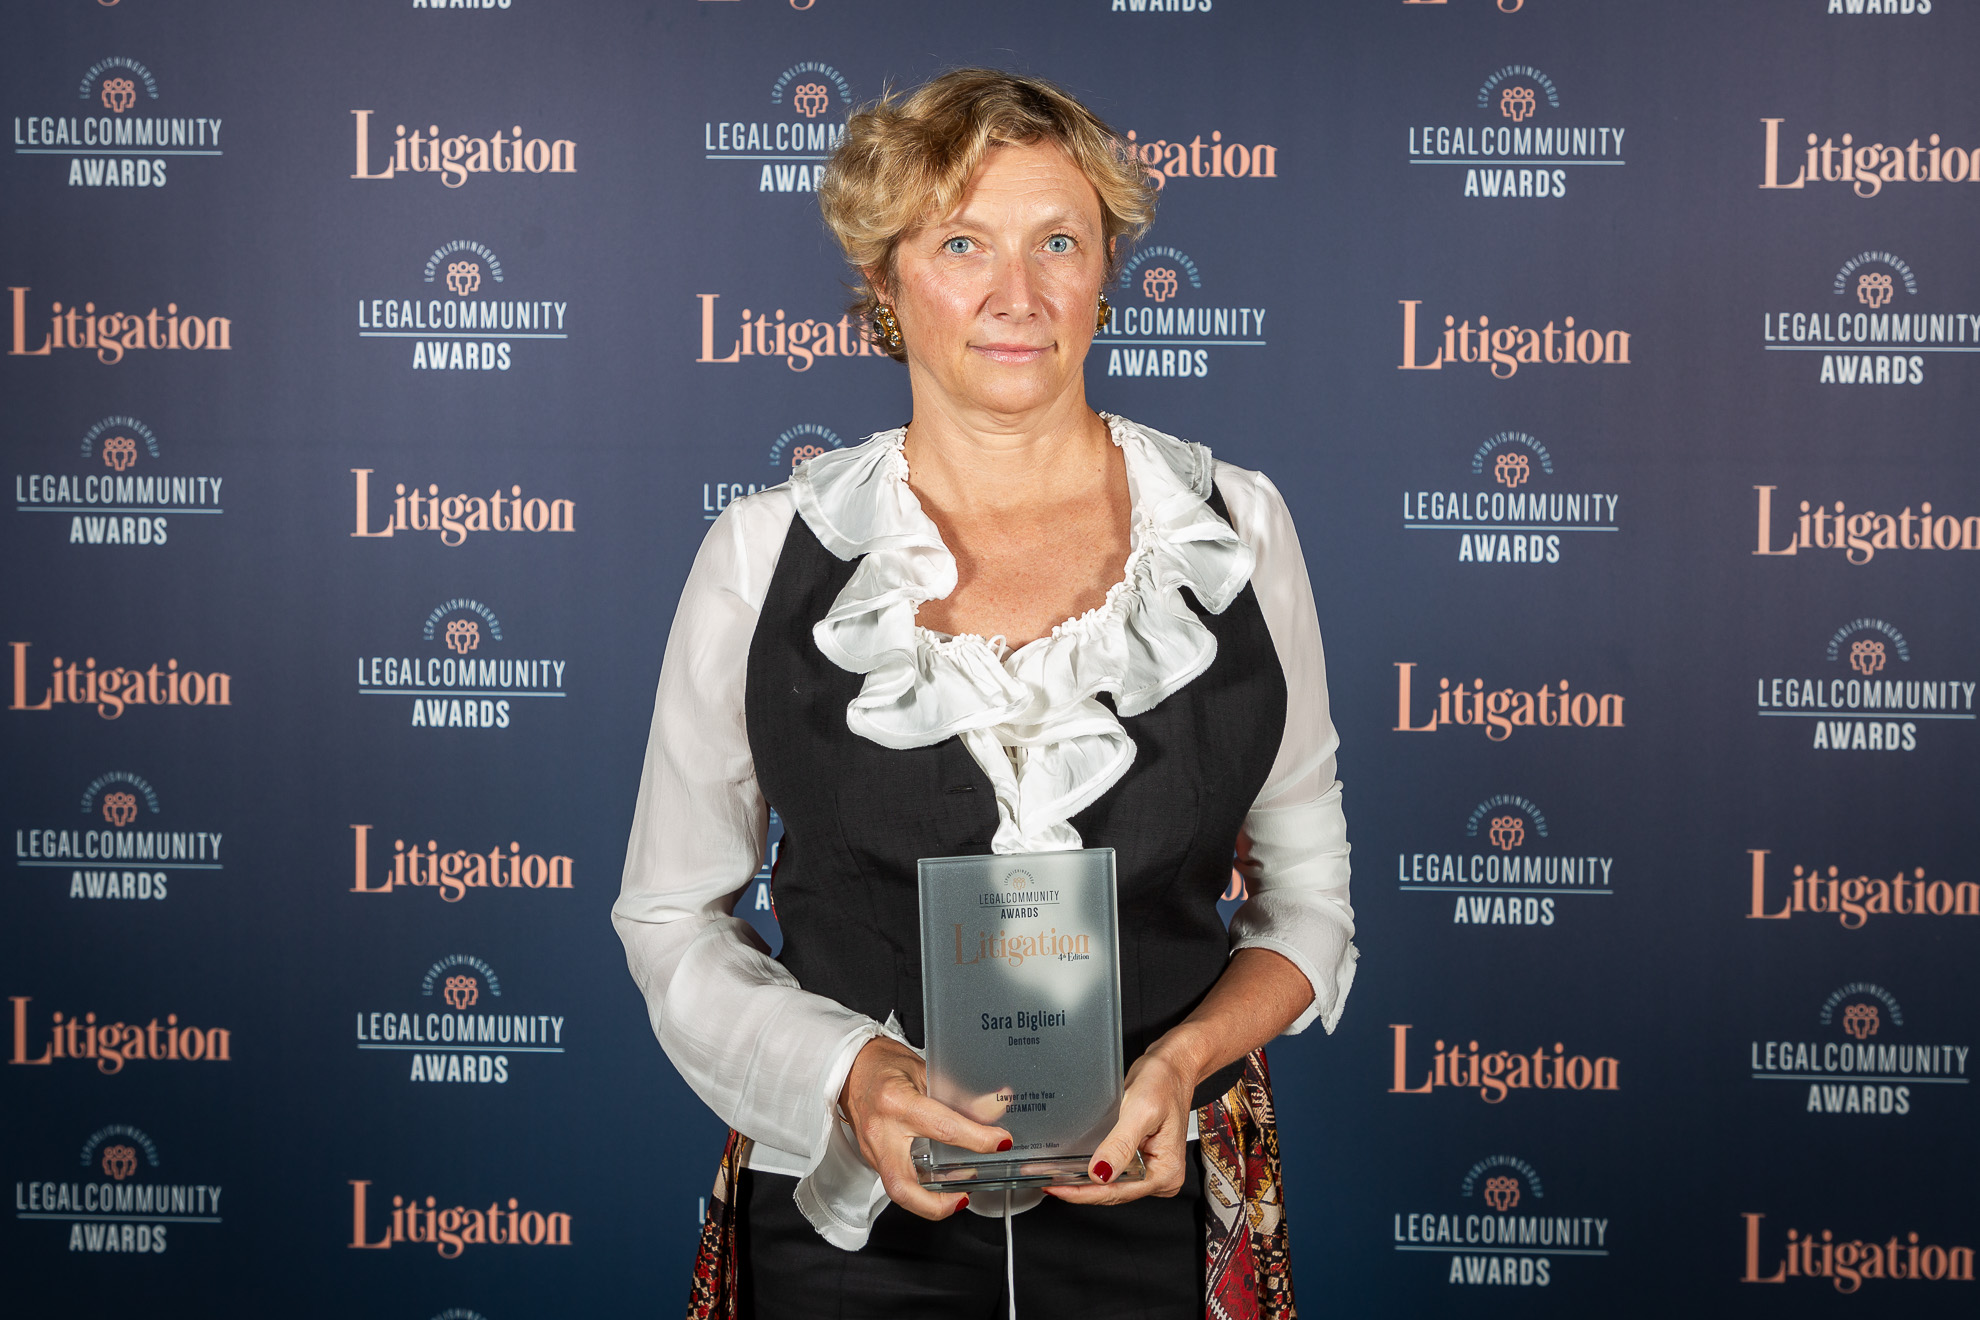 Legal community Litigation Awards - Sara Biglieri with an award